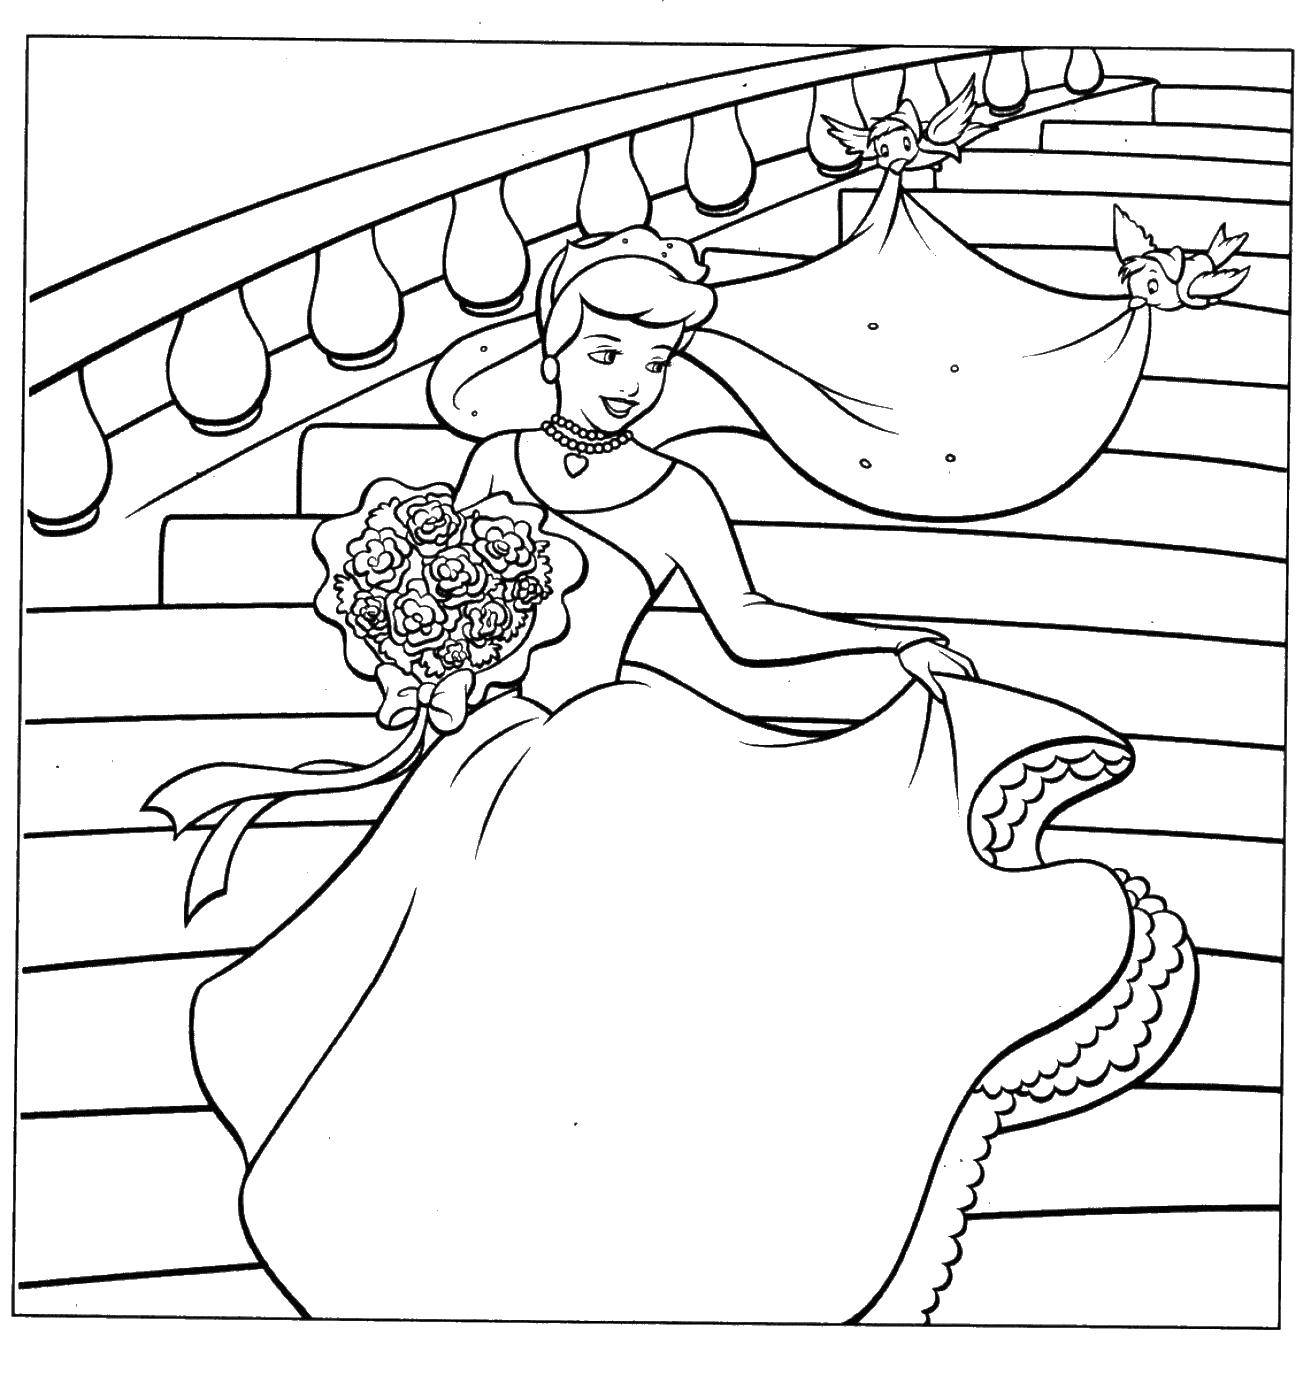 Coloring Cinderella in wedding dress. Category Cinderella. Tags:  Cinderella, wedding.